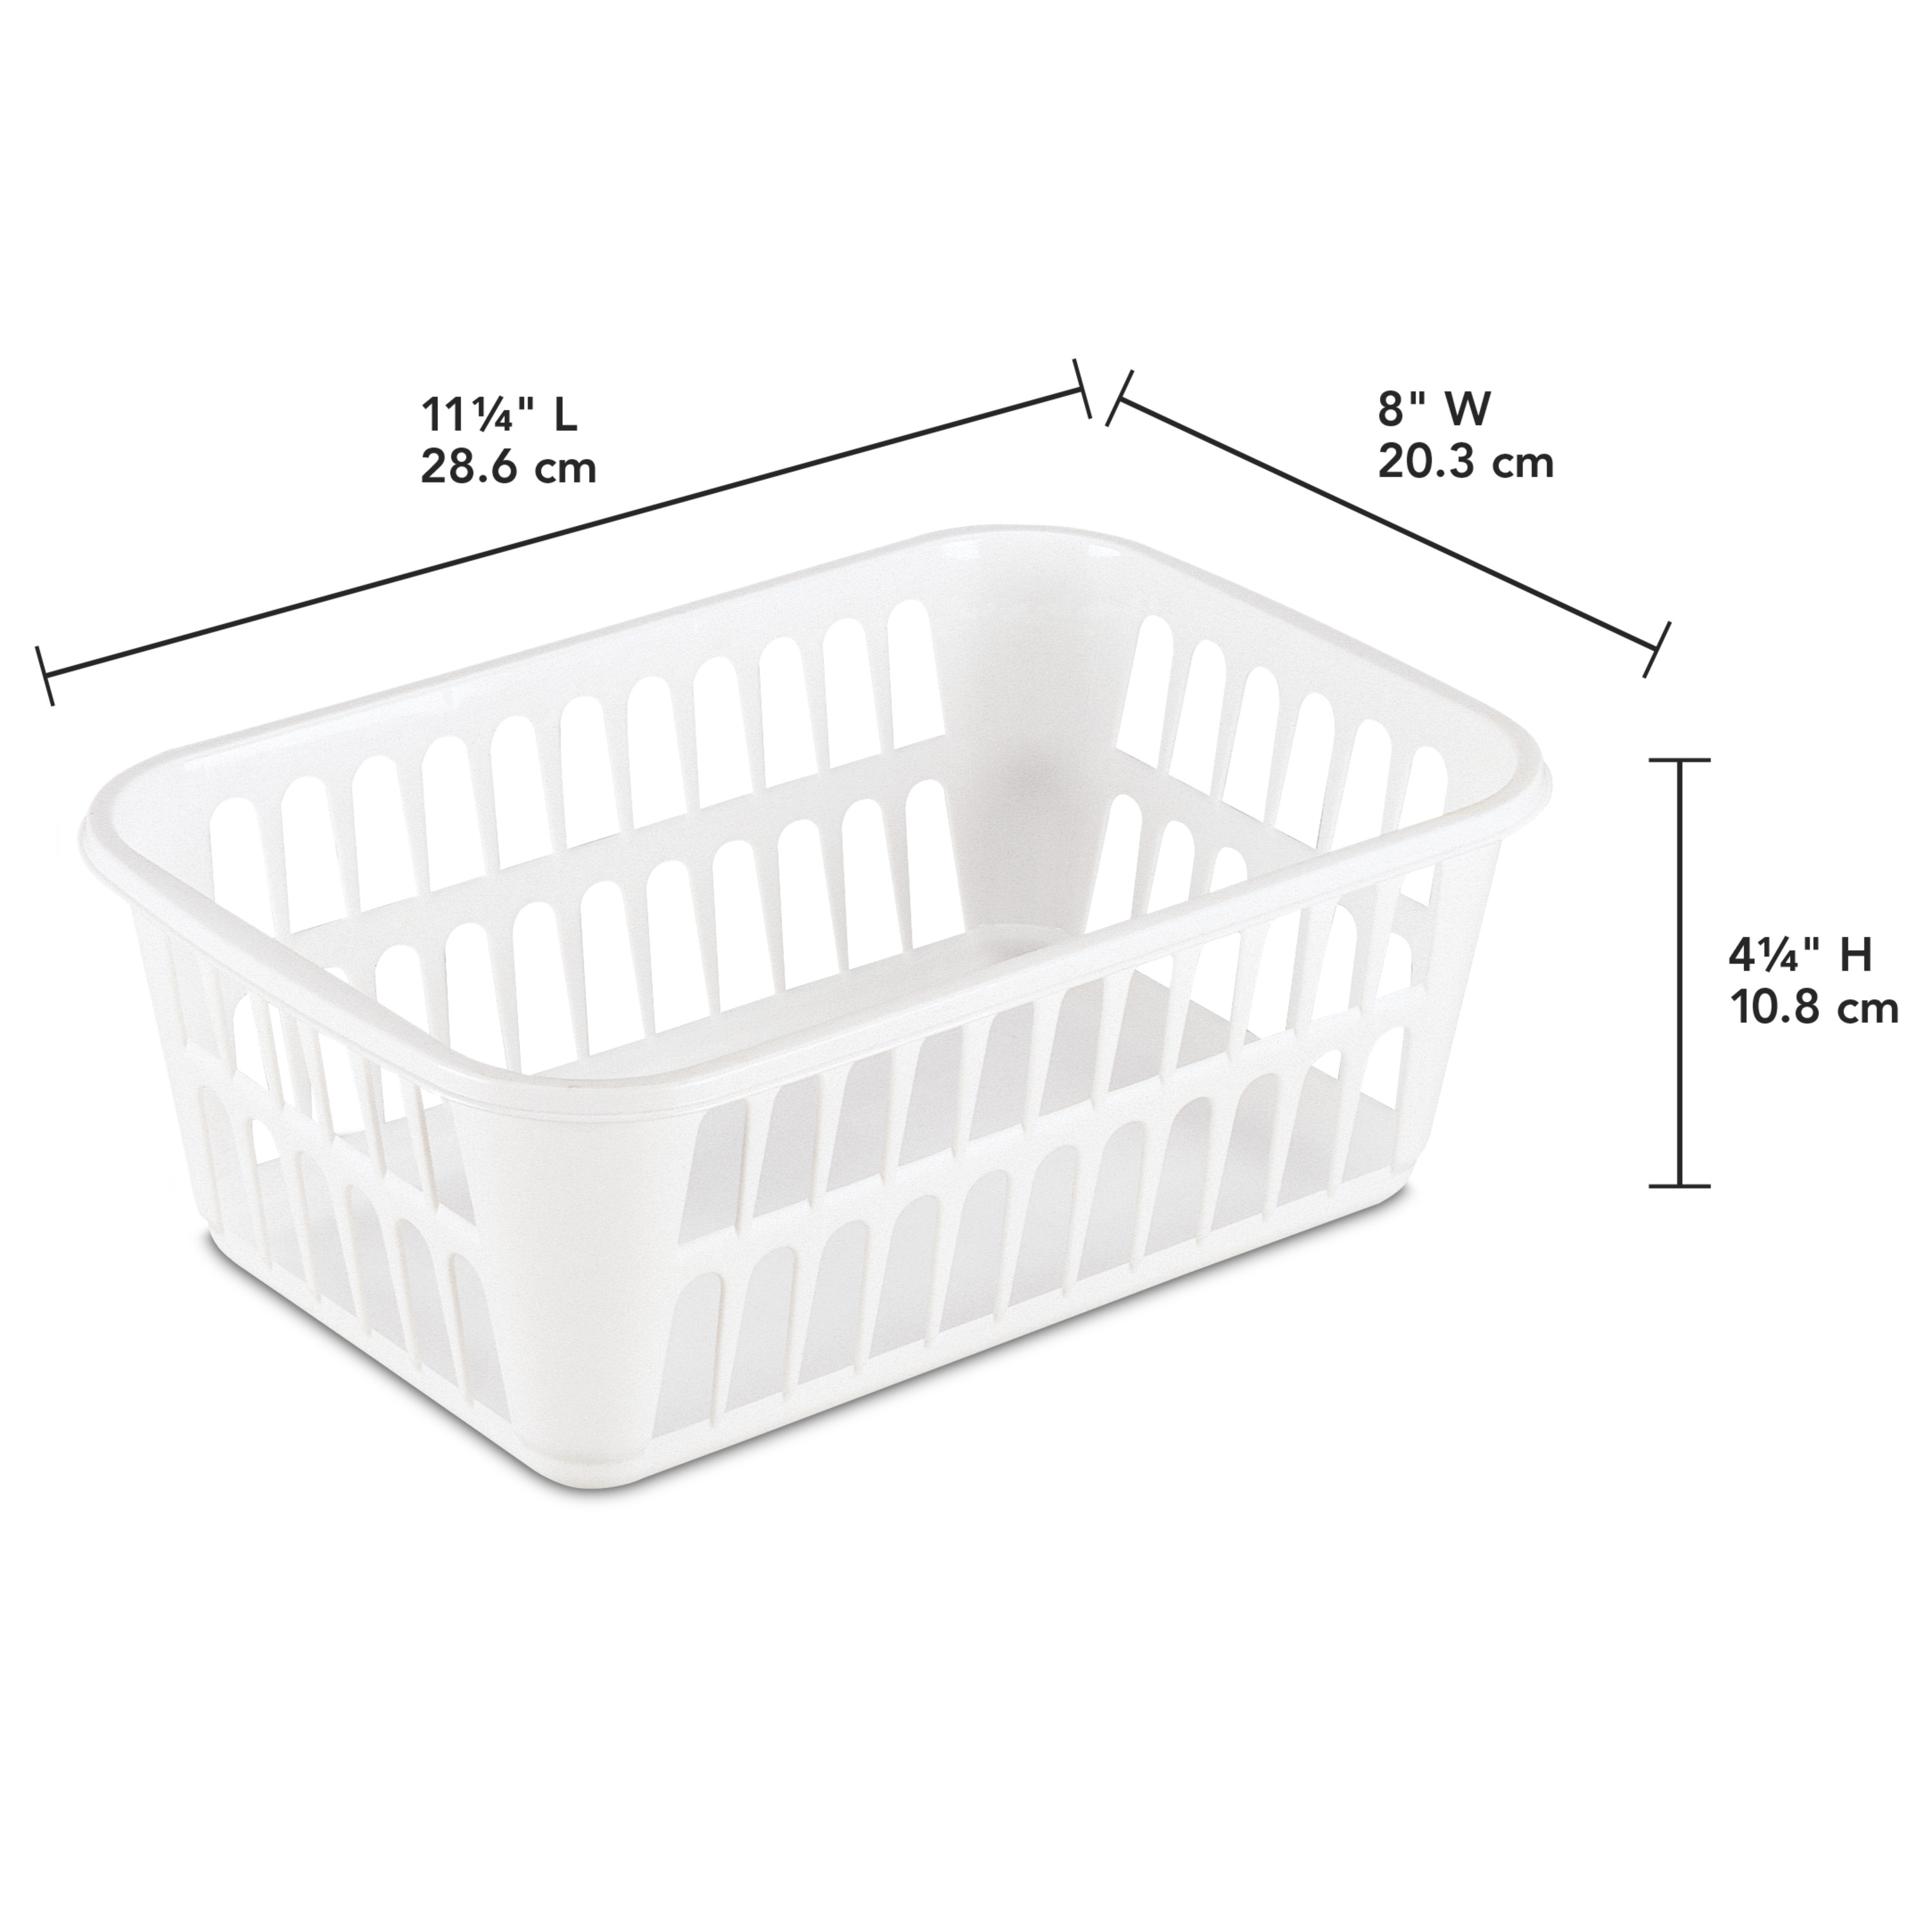 Sterilite Storage Basket Plastic, White, Set of 16 - image 3 of 9